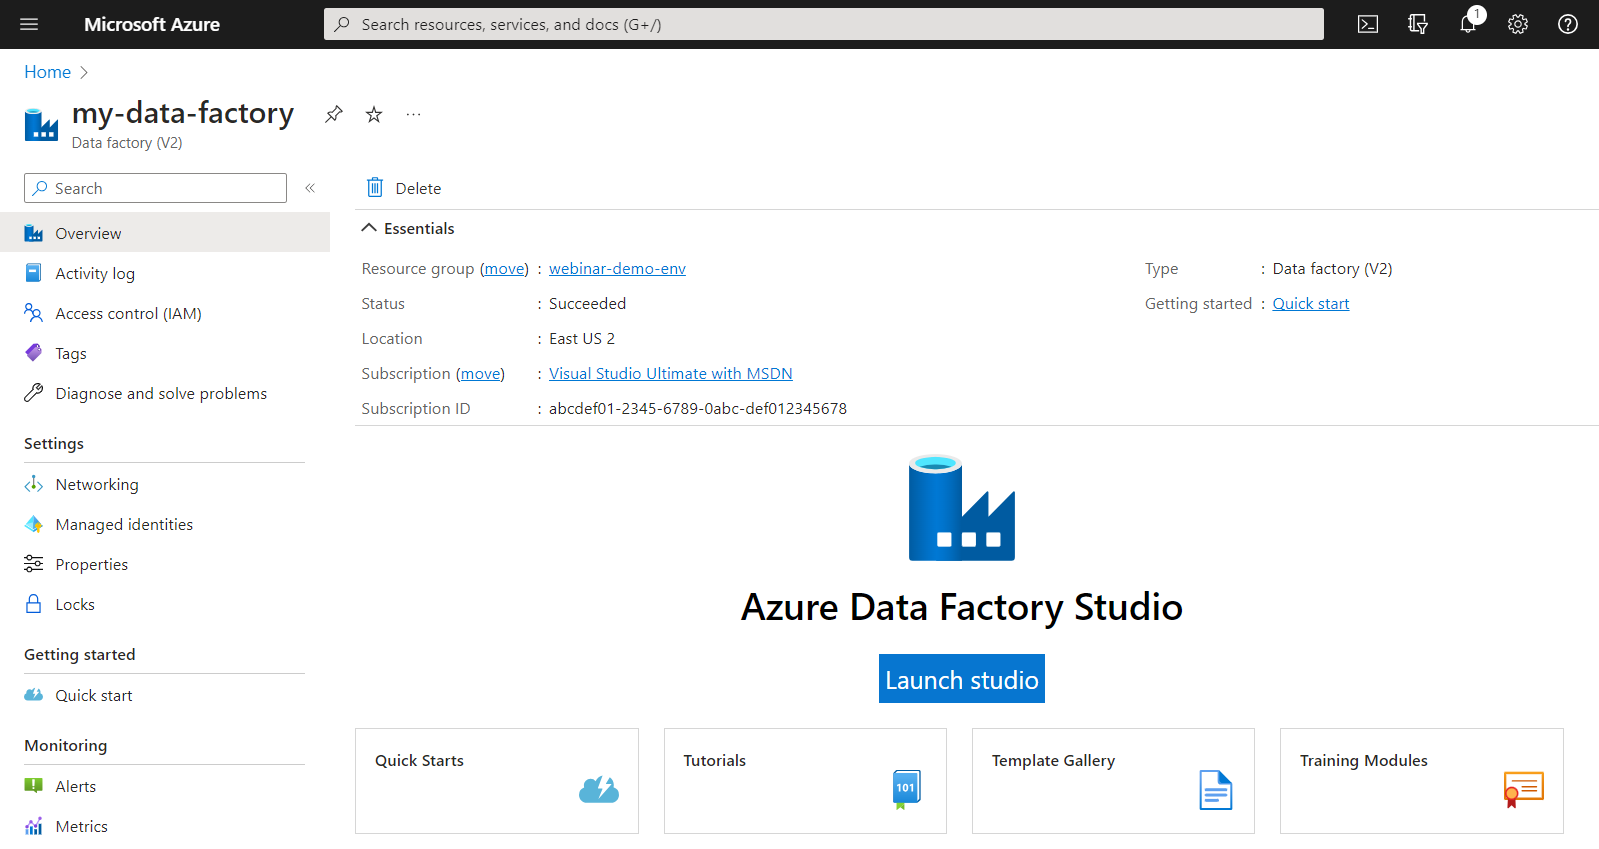 Screenshot that shows the Launch studio button in the Azure portal.